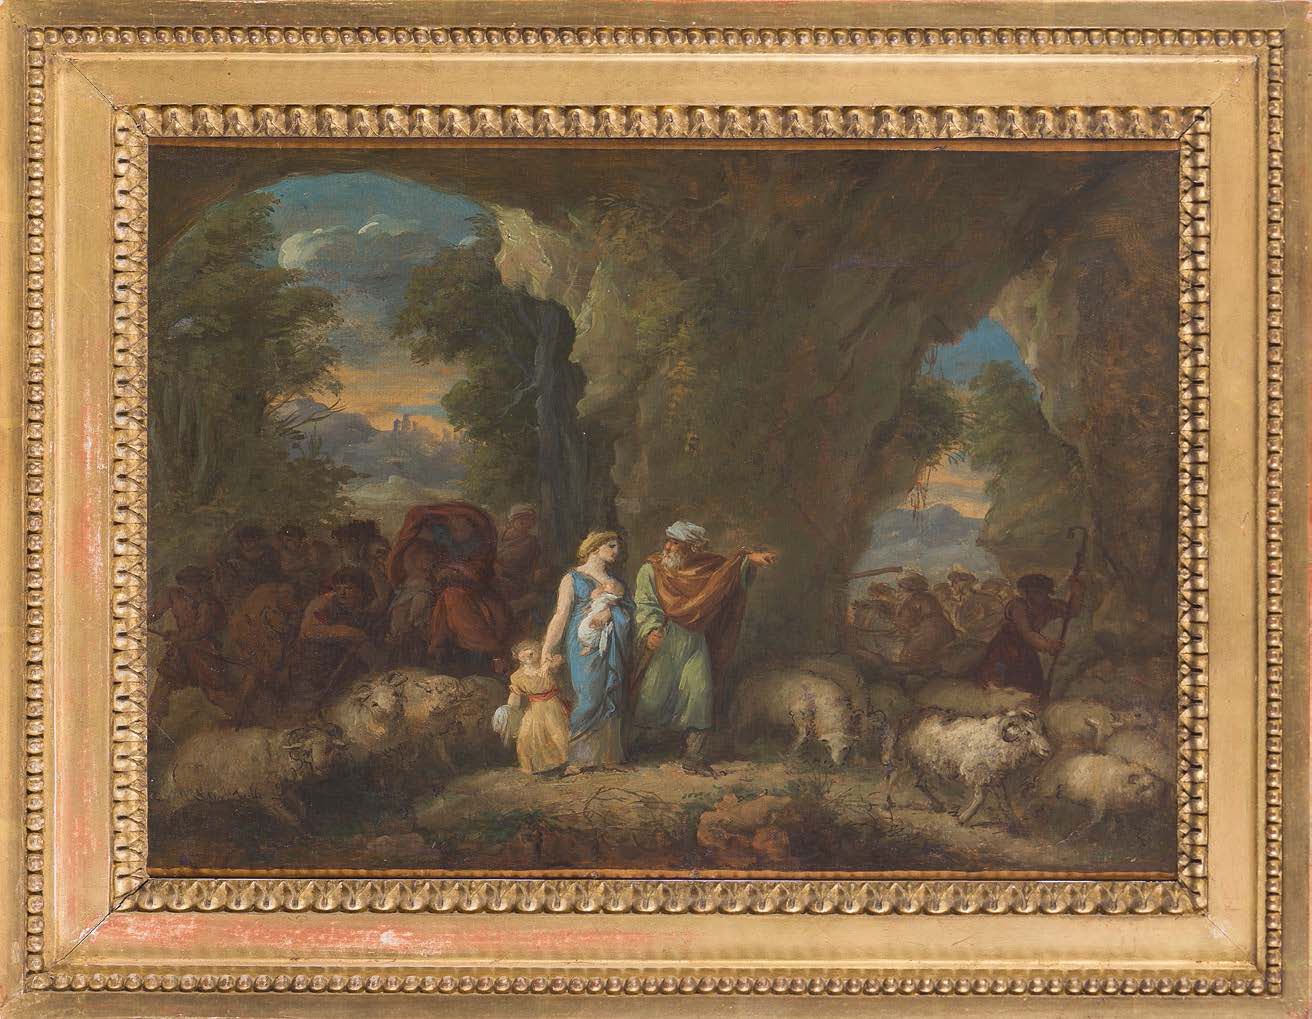 Jean Jacques LAGRENEE (Paris 1739 - 1821) 亚伯拉罕返回迦南地
Marouflage画布纸 29 x 41.5 cm
(&hellip;